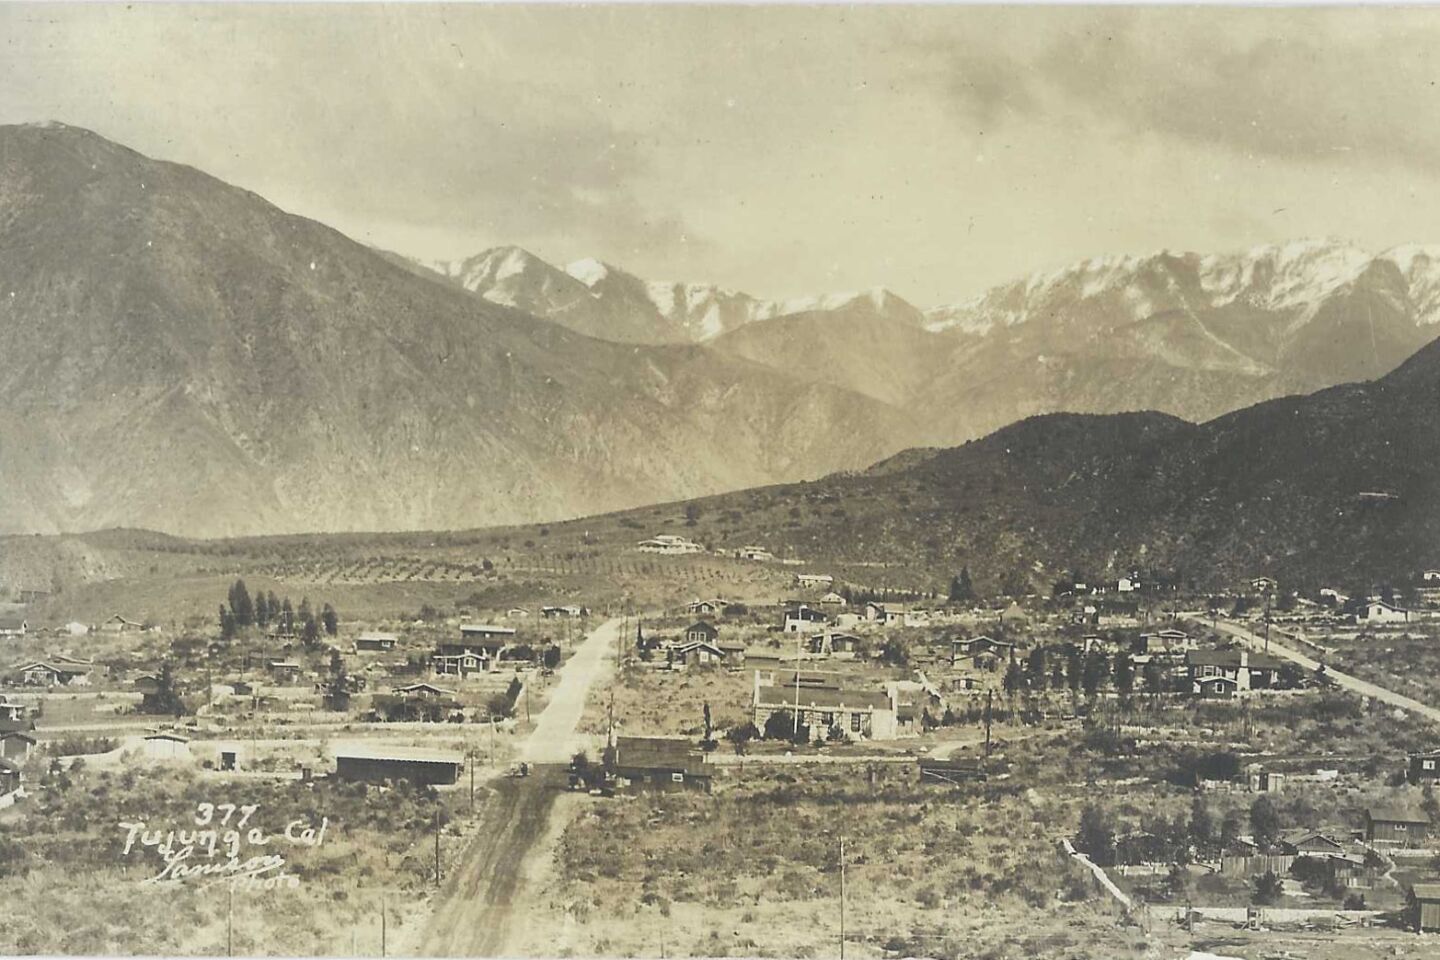 A vintage postcard shows the mountain vistas of Tujunga